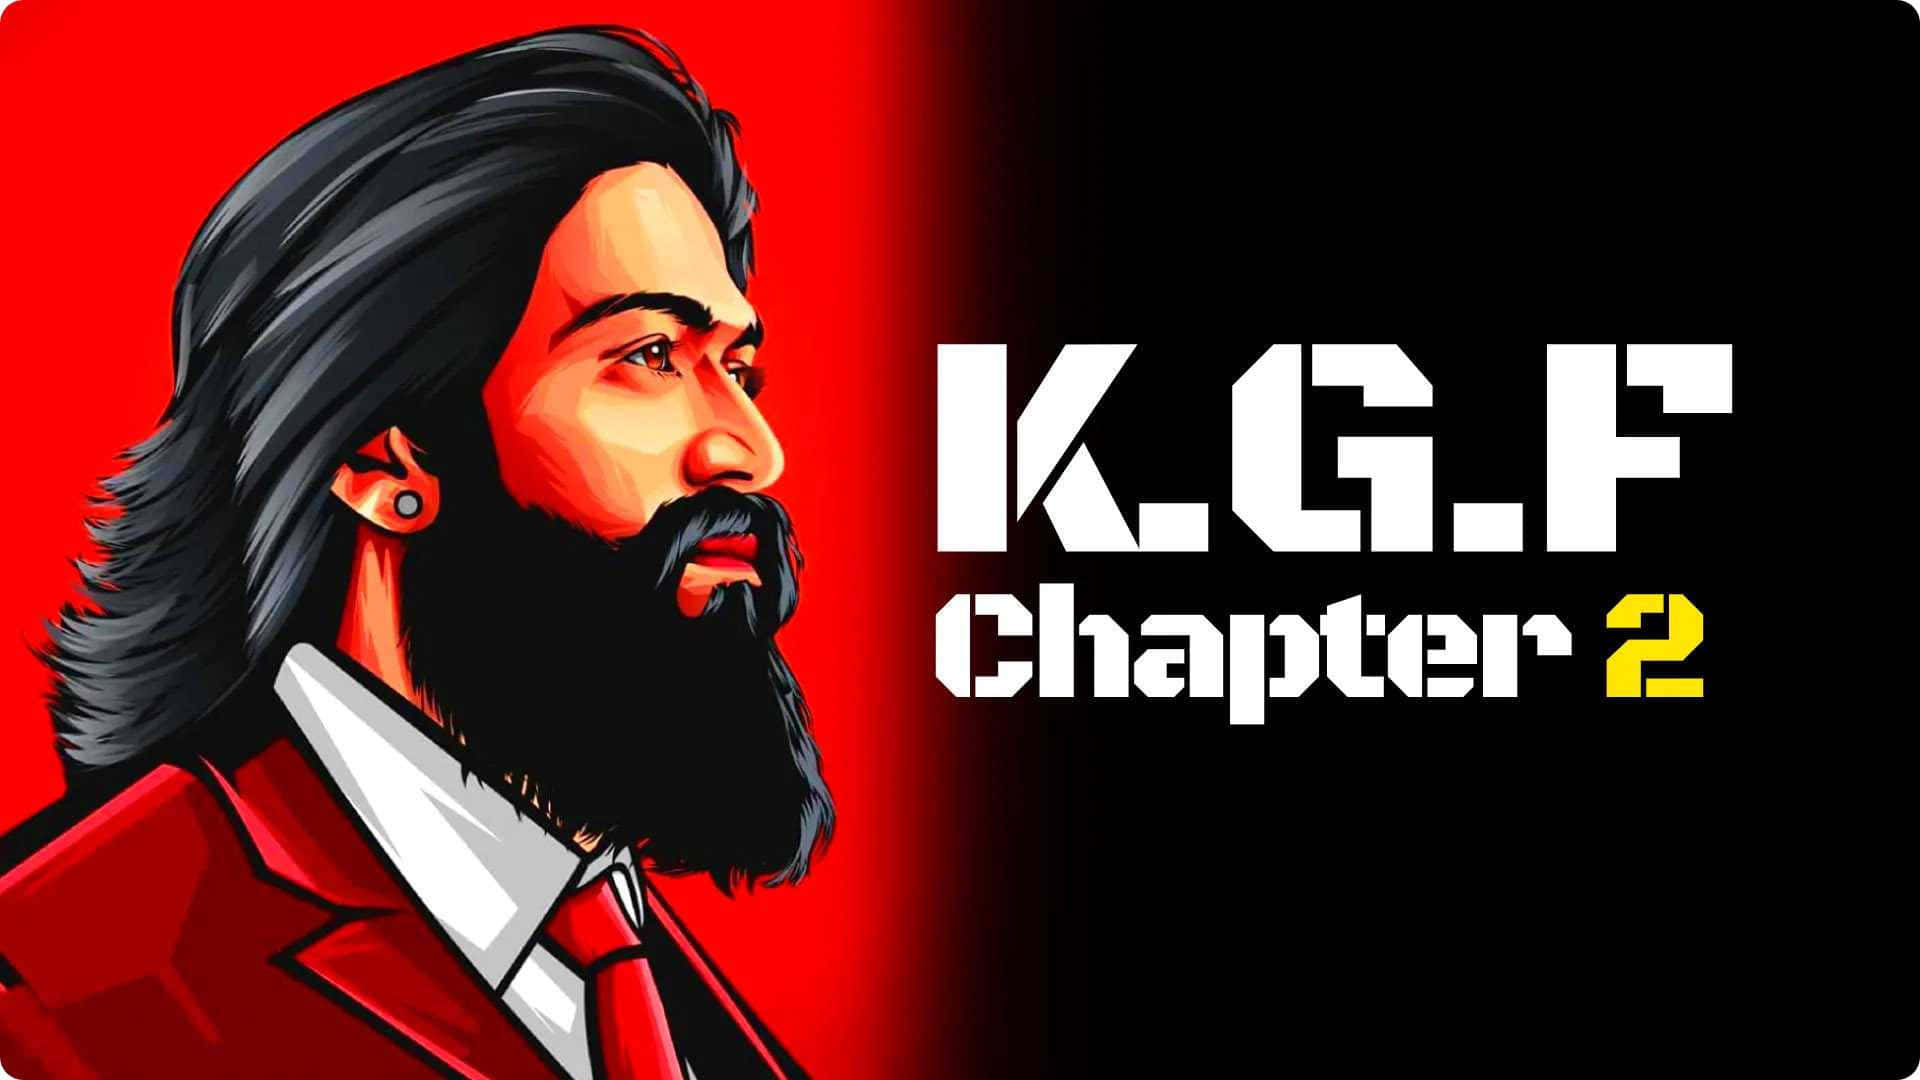 Kgf Chapter 2 Background Wallpaper